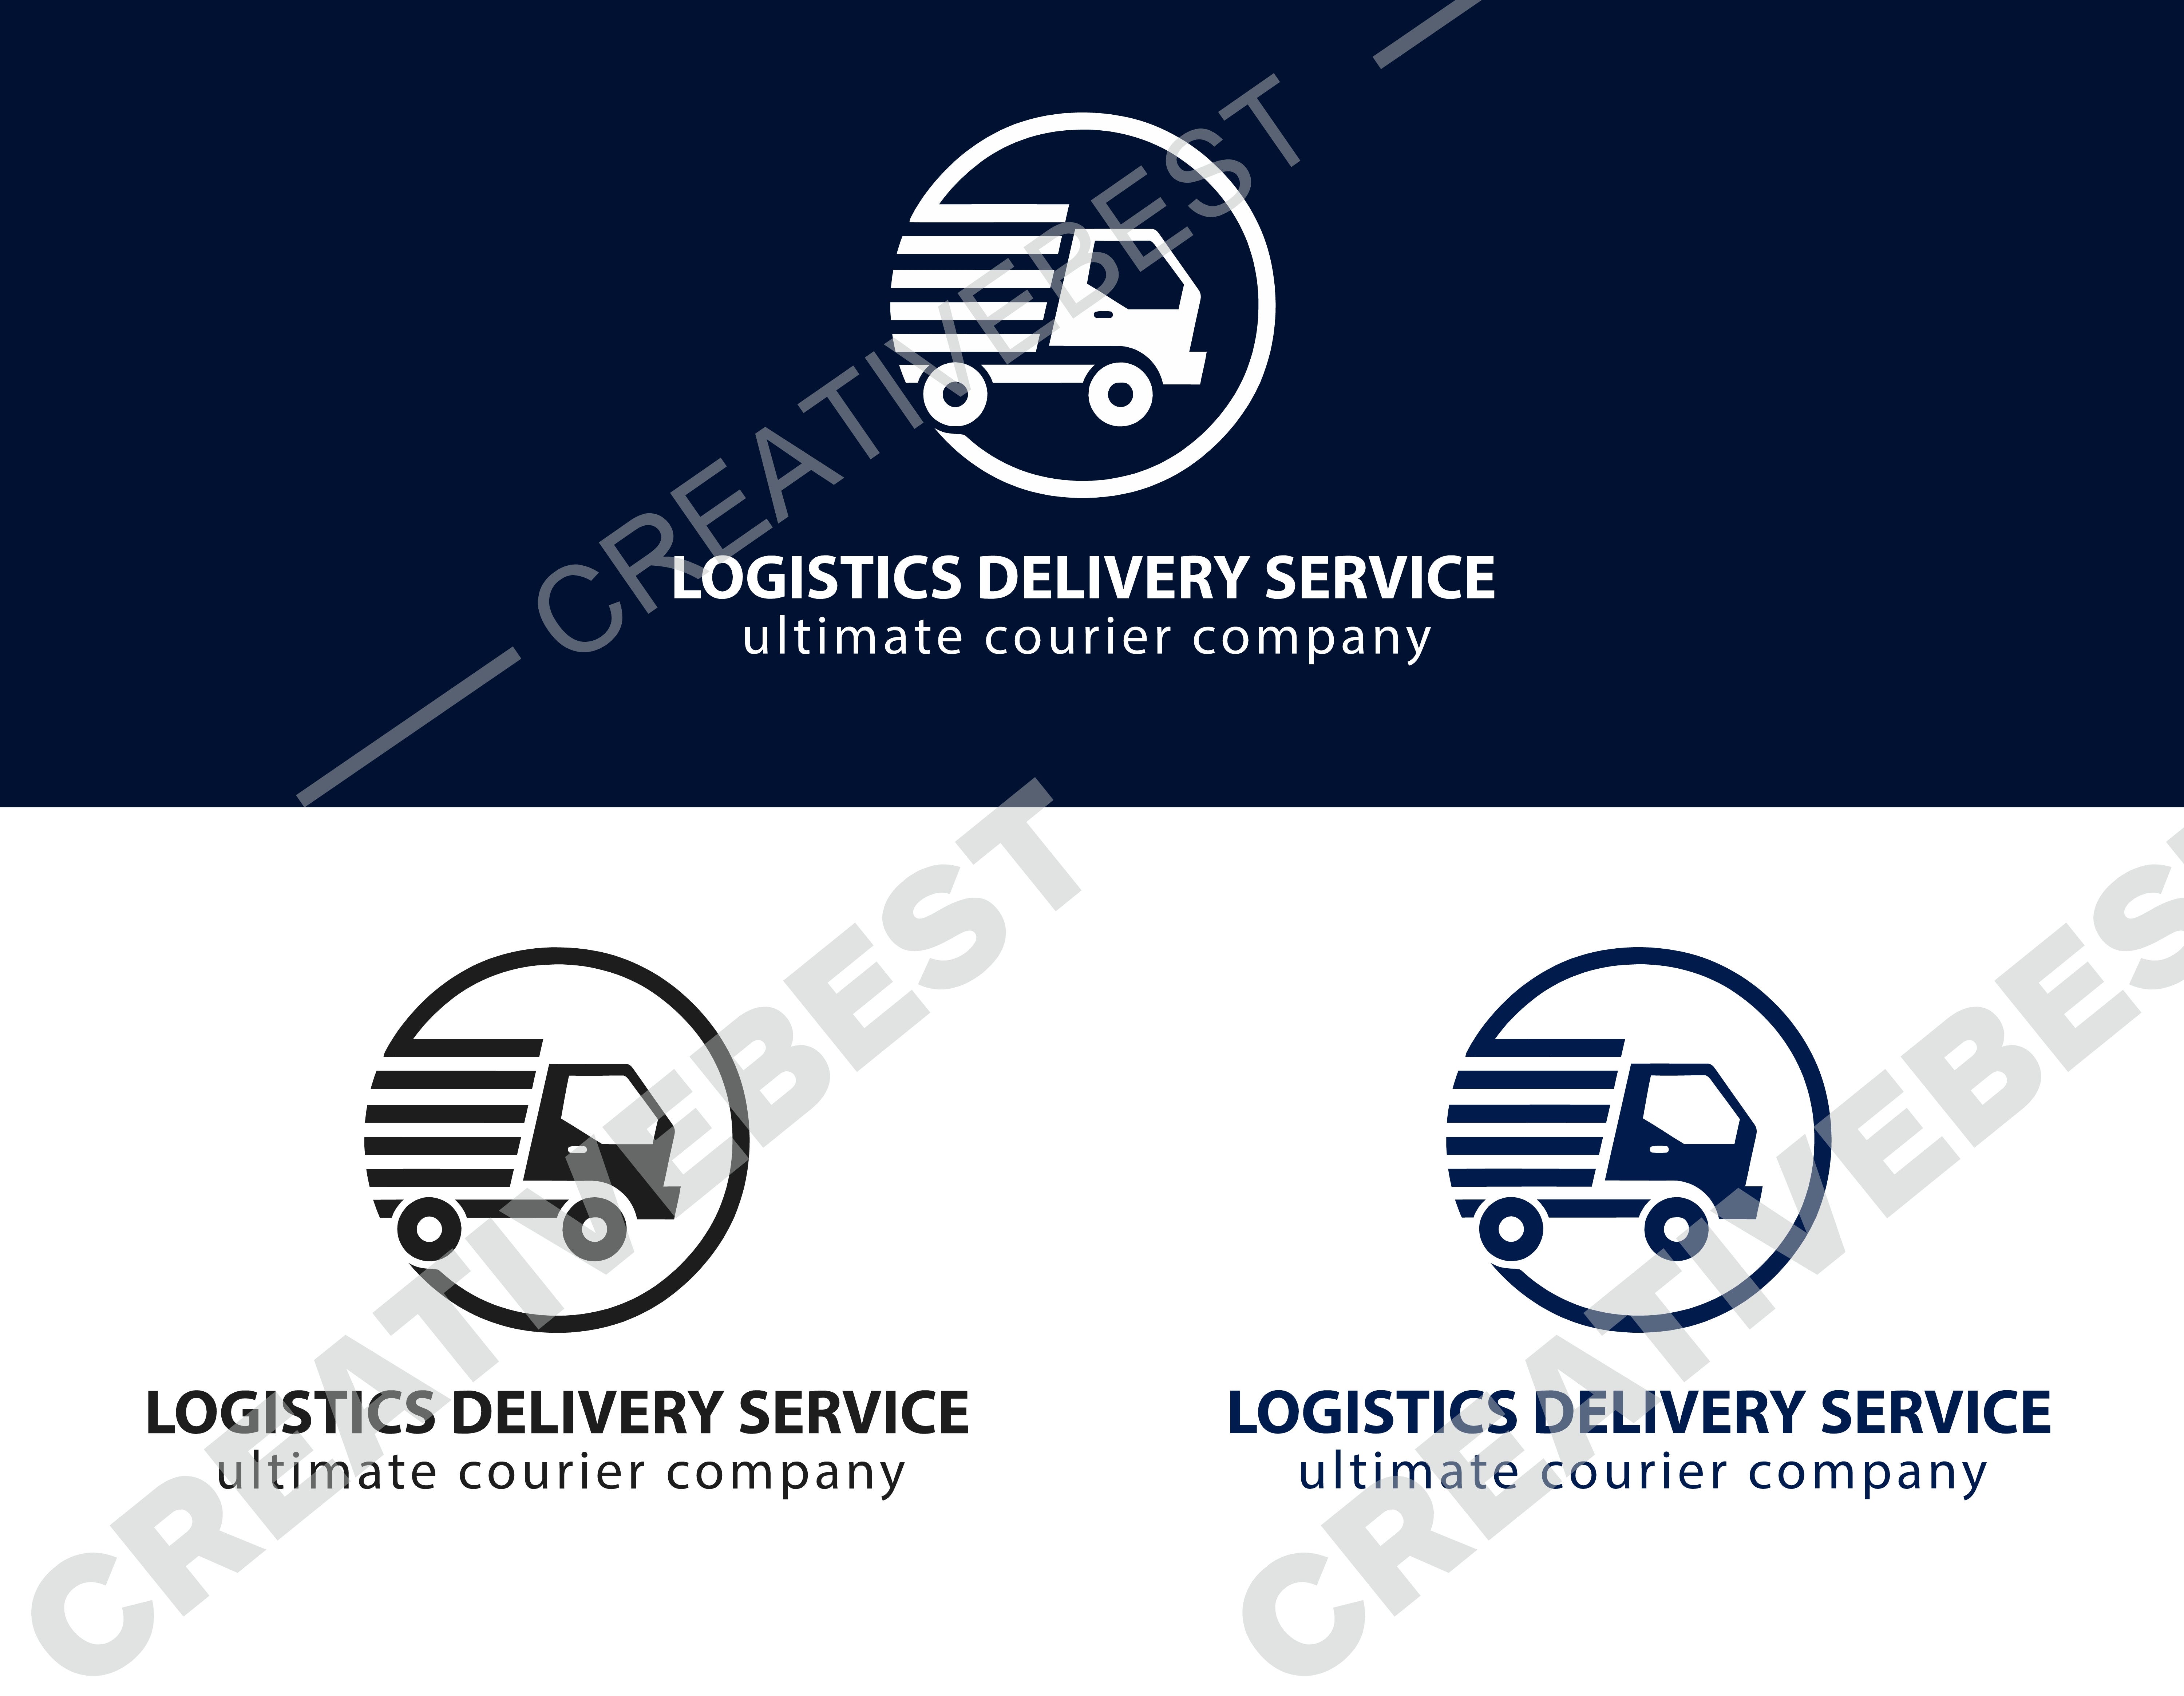 Logistics Delivery Service logo